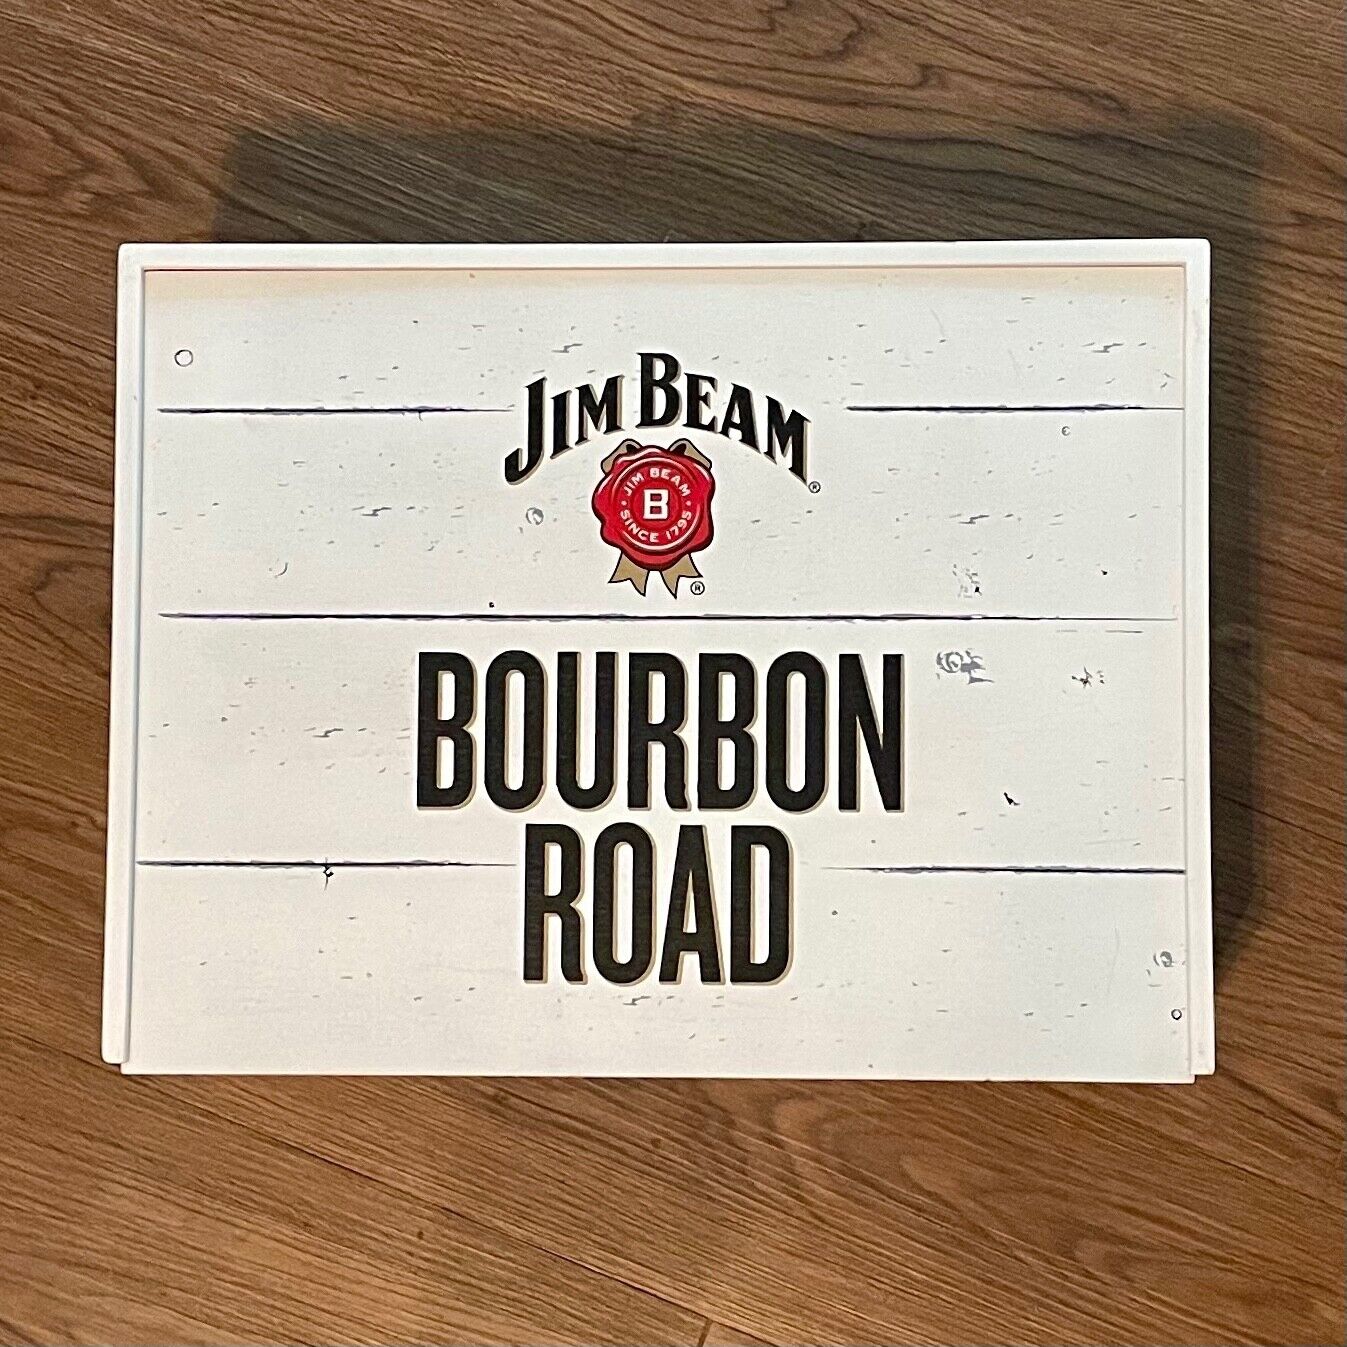 Jim Beam Bourbon Road Bourbon Whiskey Wooden Crate Box